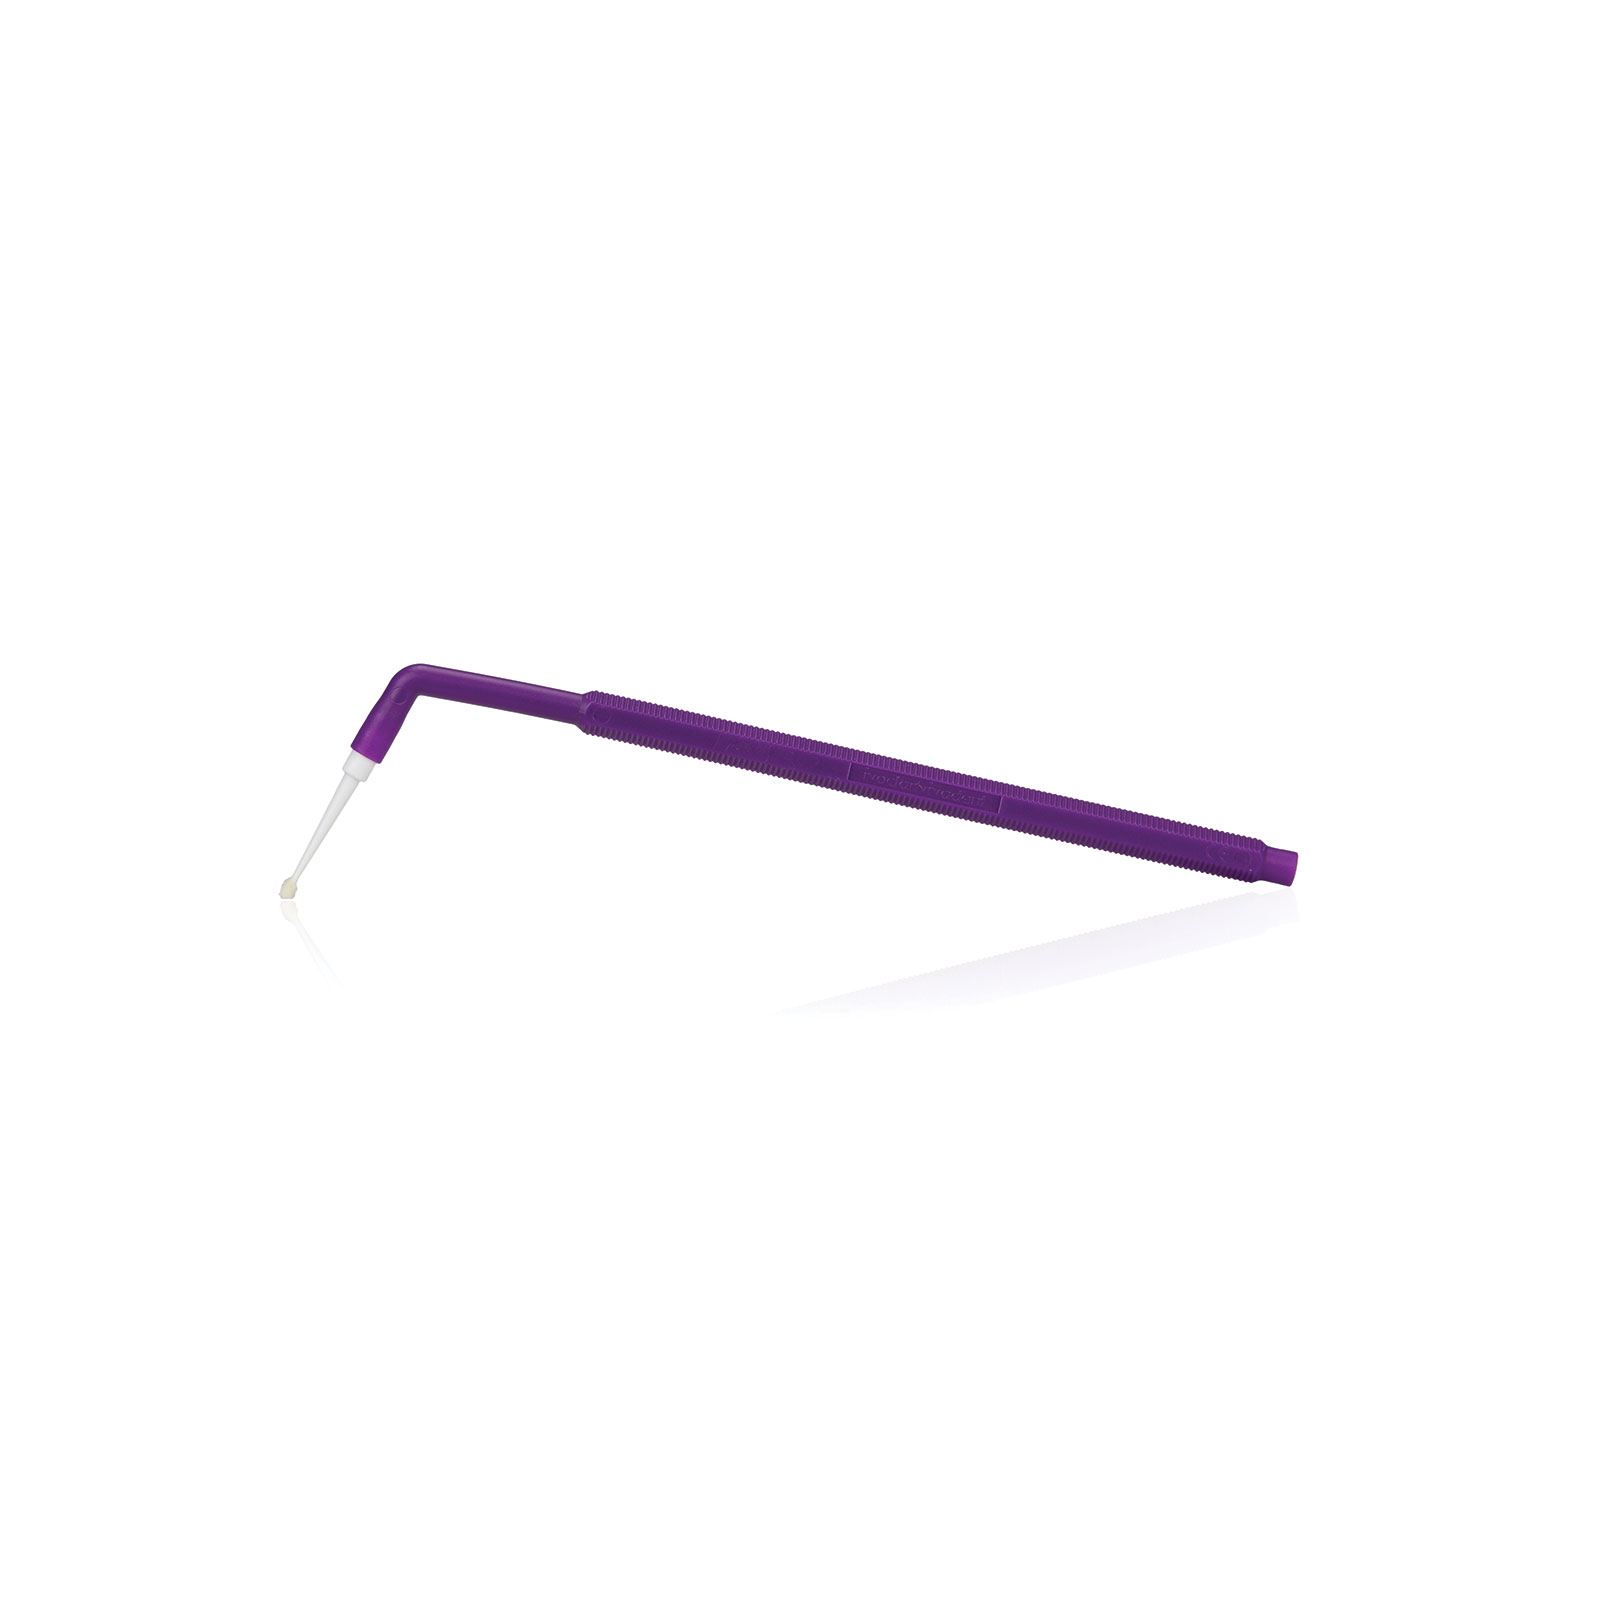 Brush Holder violet